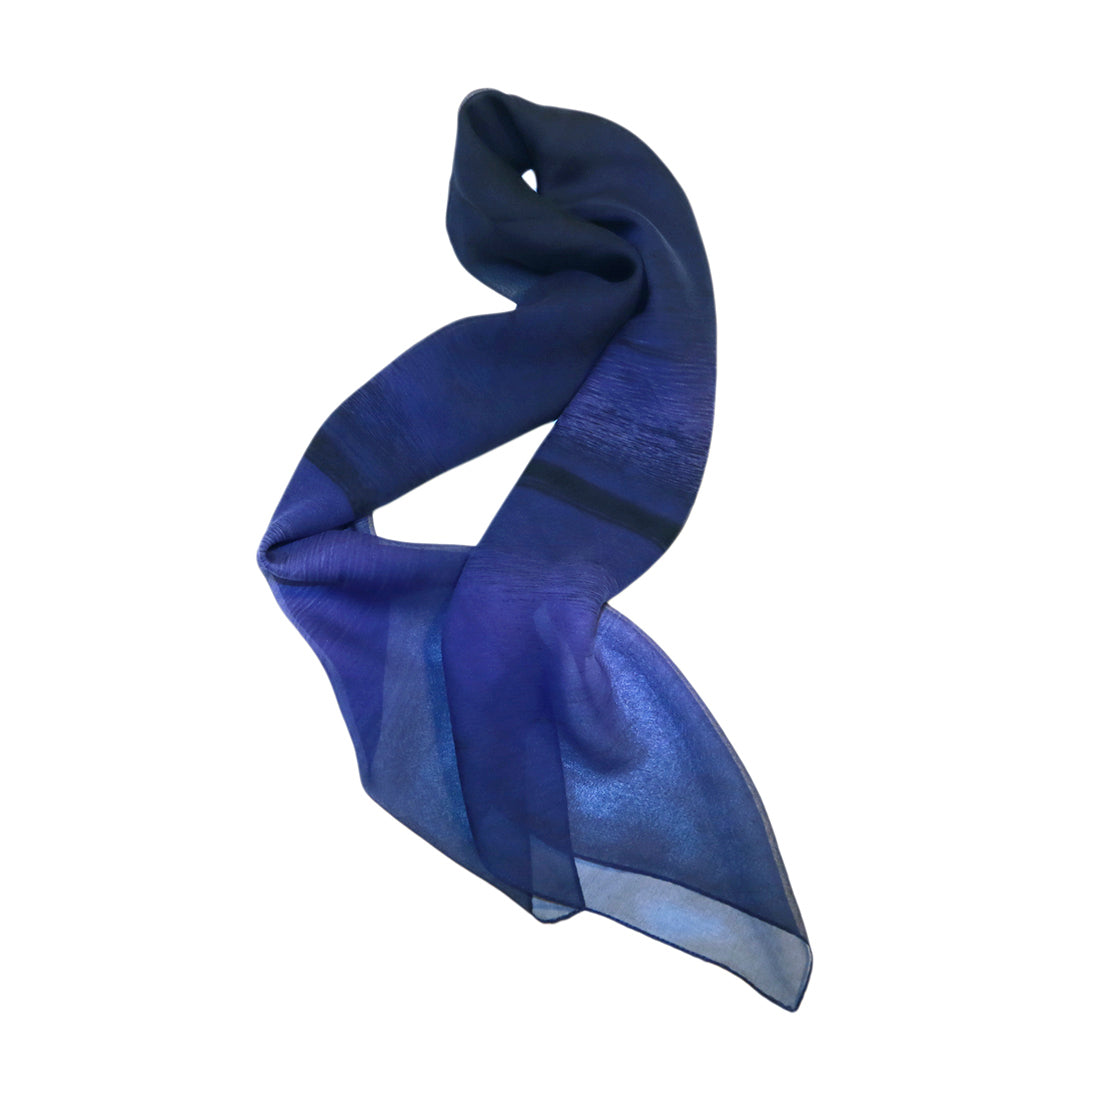 luxury stylish silk chiffon scarf from a friend of mine 法式雪紡絲巾 日本製 スカーフコーデ electric dreams